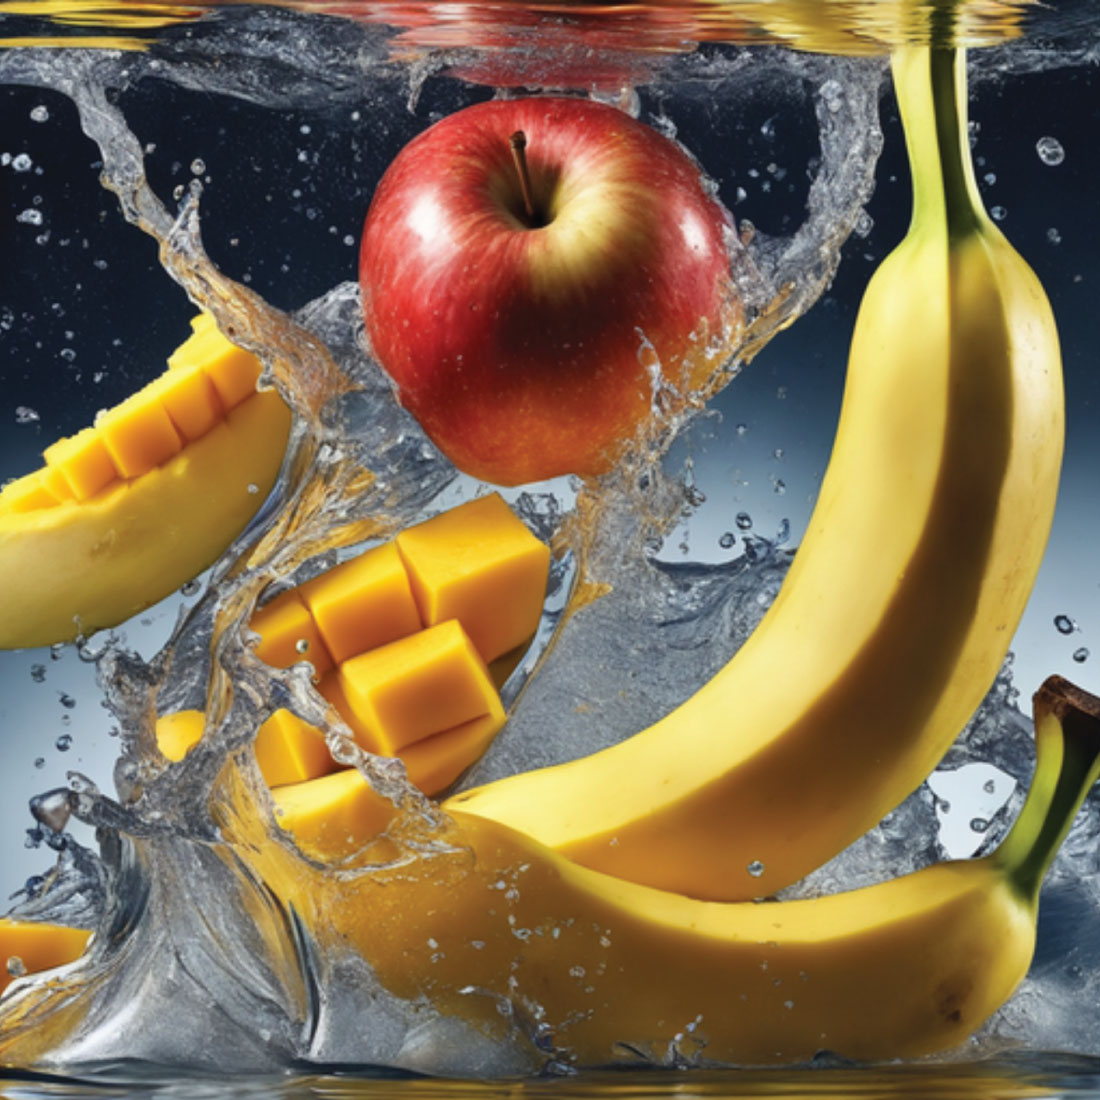 fruits water splashes 3 611